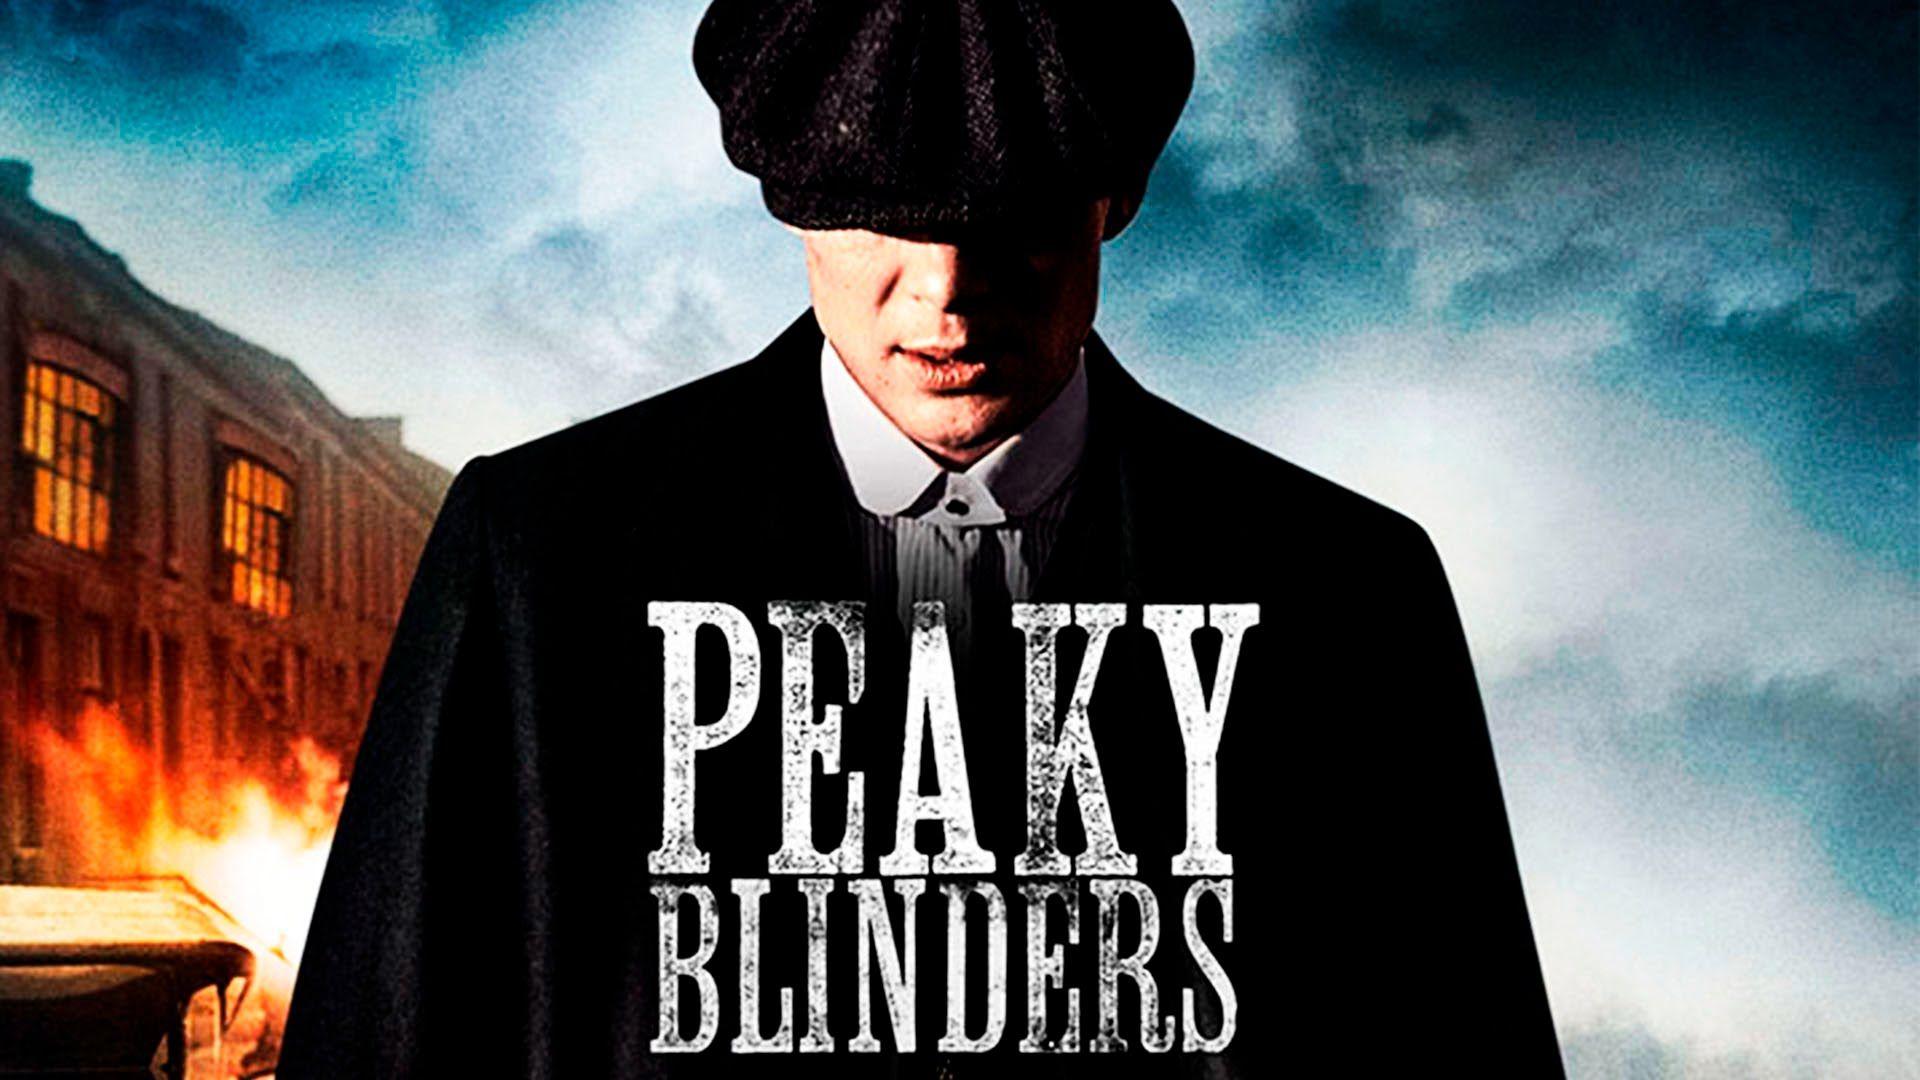 Epic Fan Peaky Blinders (Serie TV) English Sub